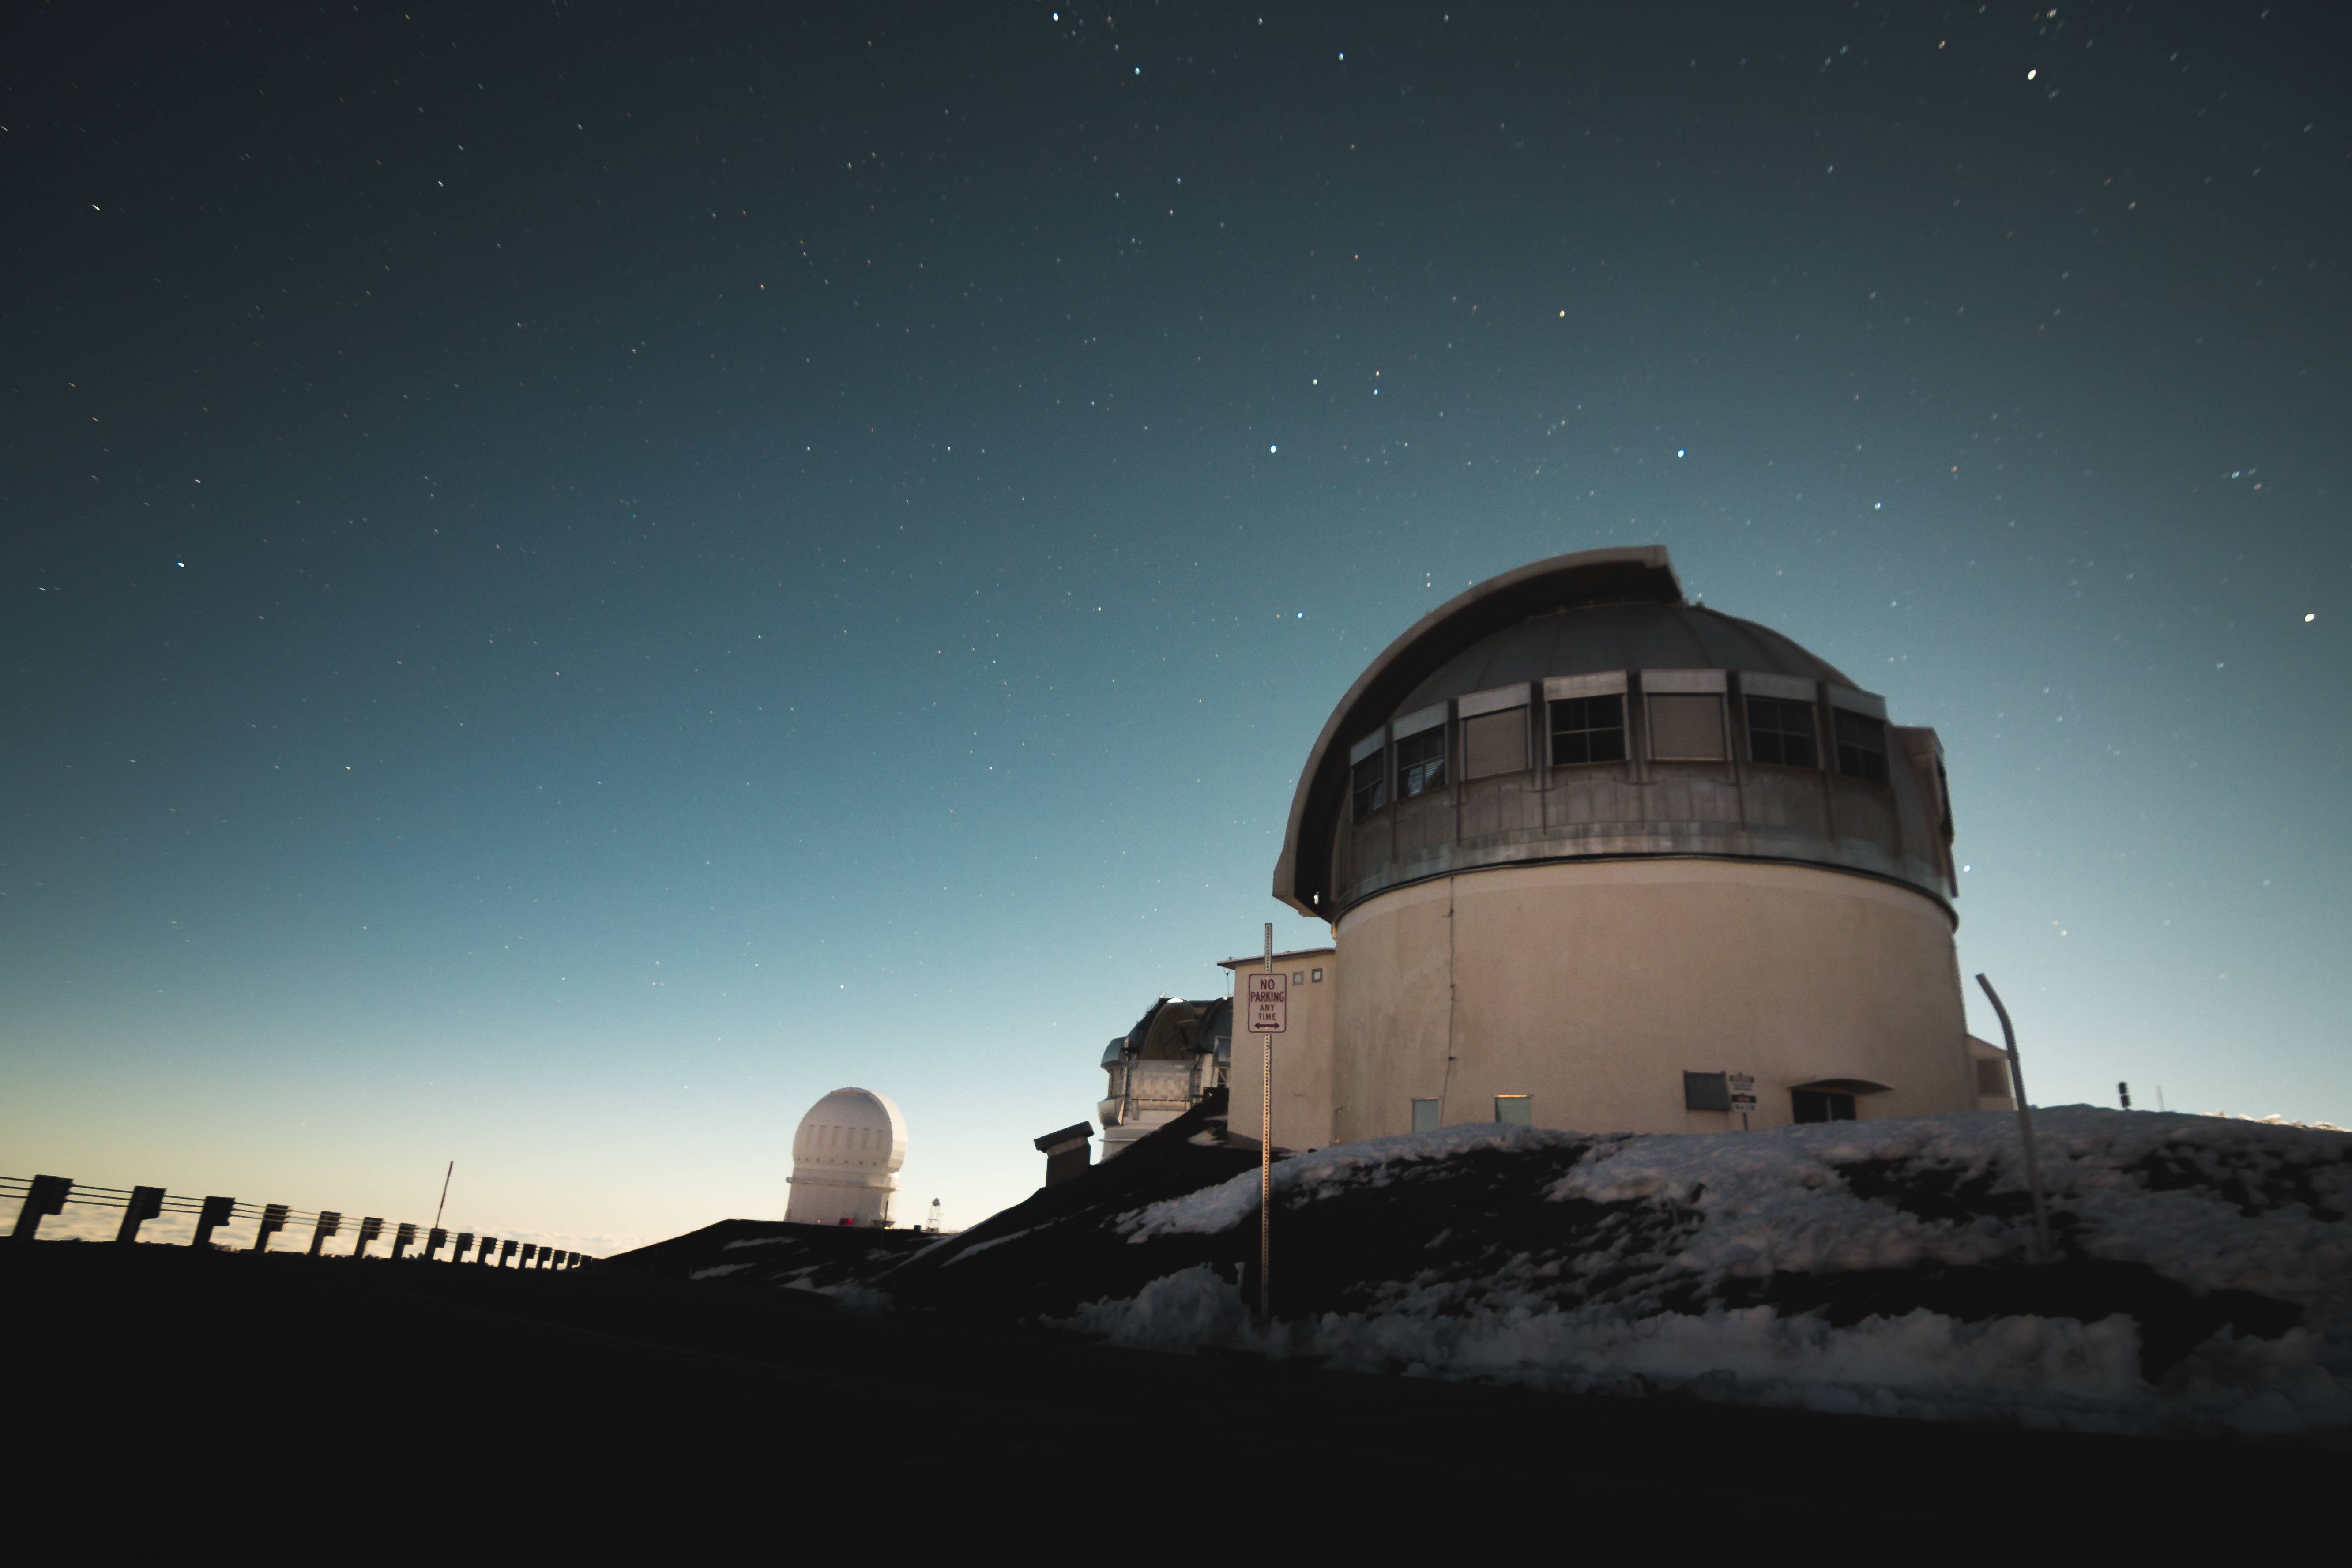 hawaii telescope photo